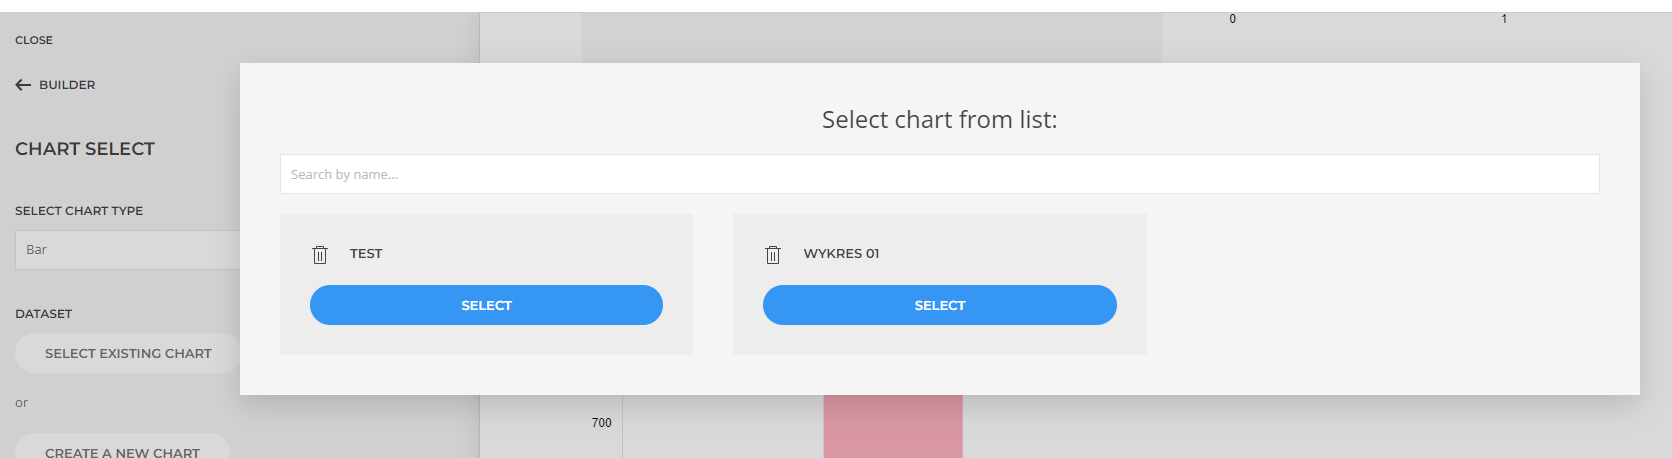 dj-charts select existing chart options